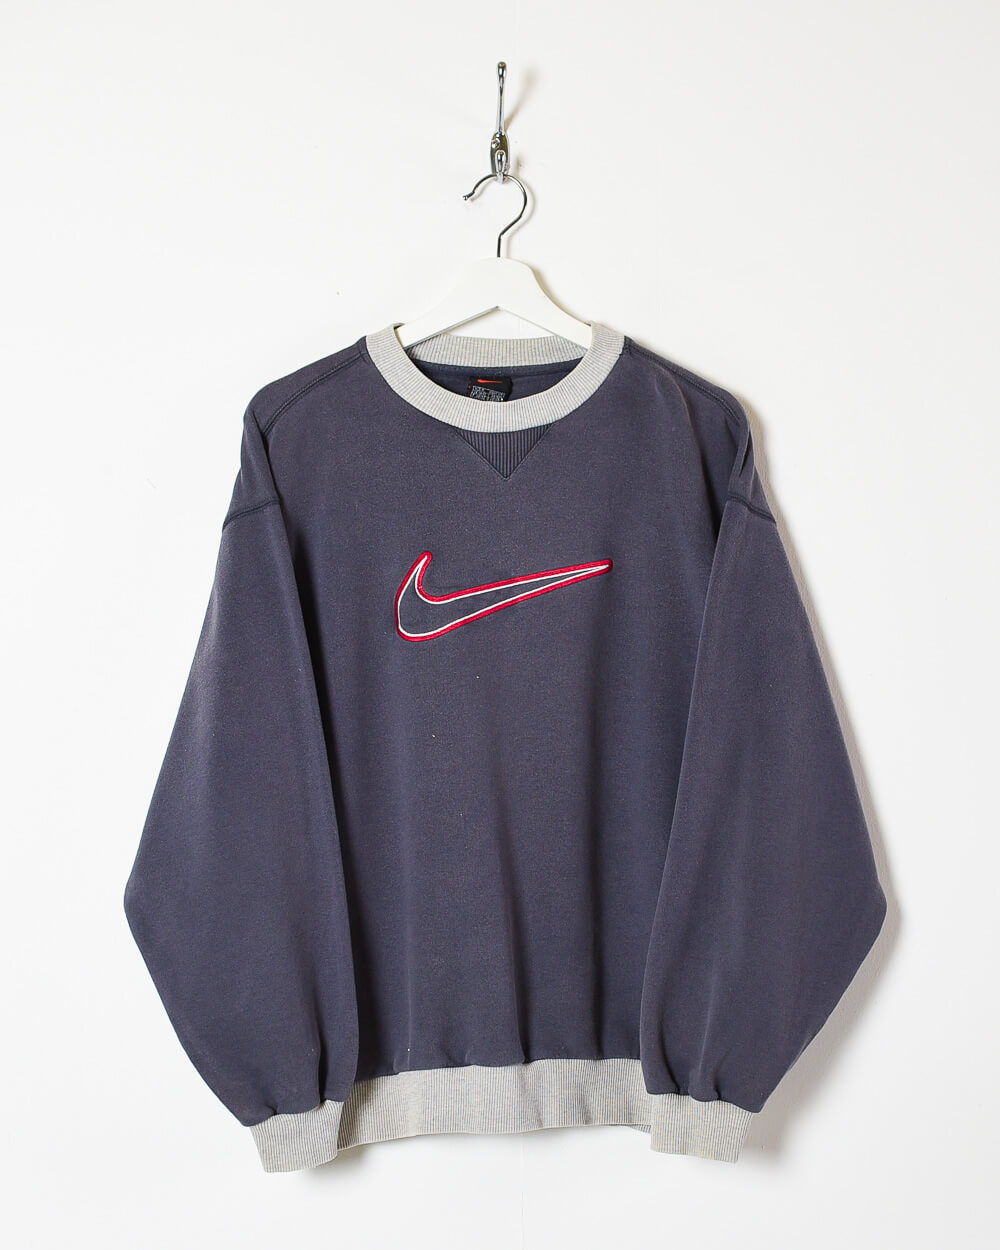 Grey Nike Sweatshirt - Medium